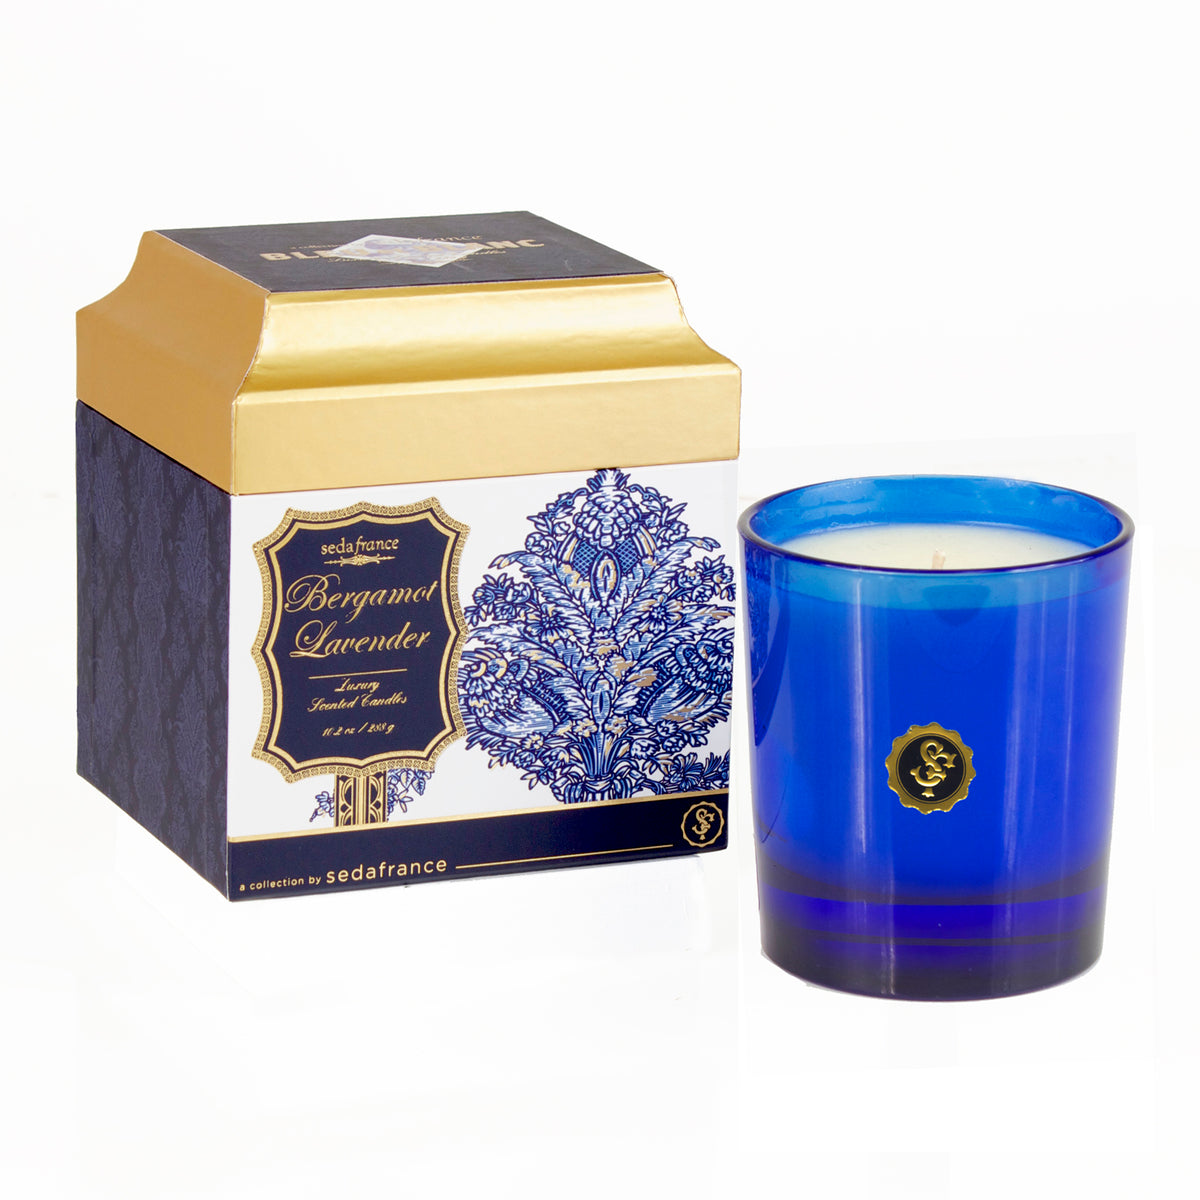 Bergamot Lavender Bleu et Blanc Boxed Candle